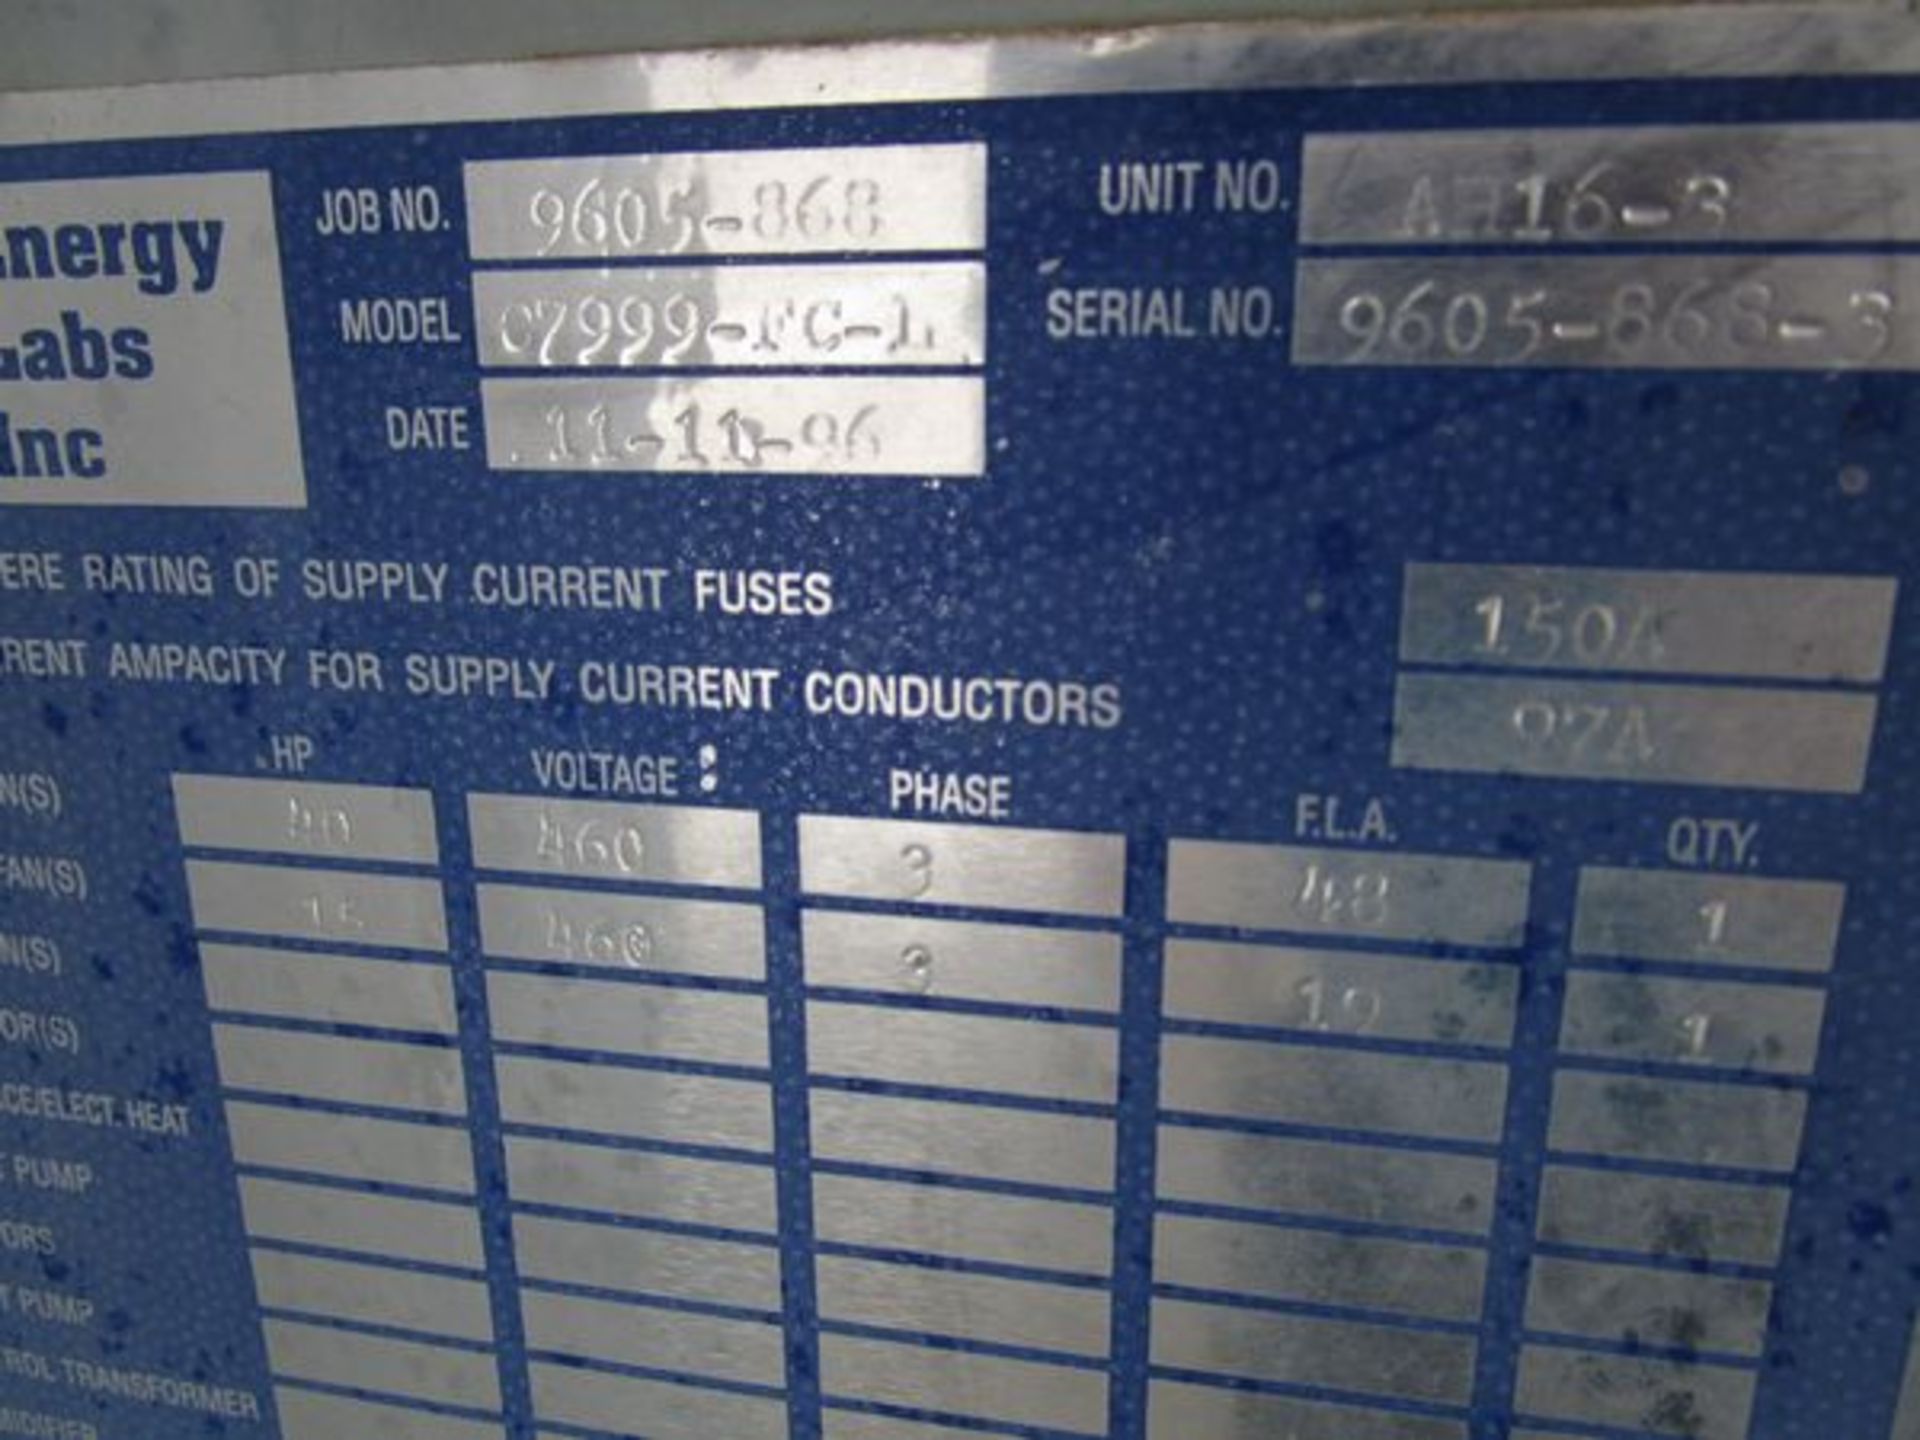 Energy Labs Model C7999-FC-L  Air Handling Unit , Serial Number: 9605-868-3  (1996)20,000 cfm - Image 2 of 2